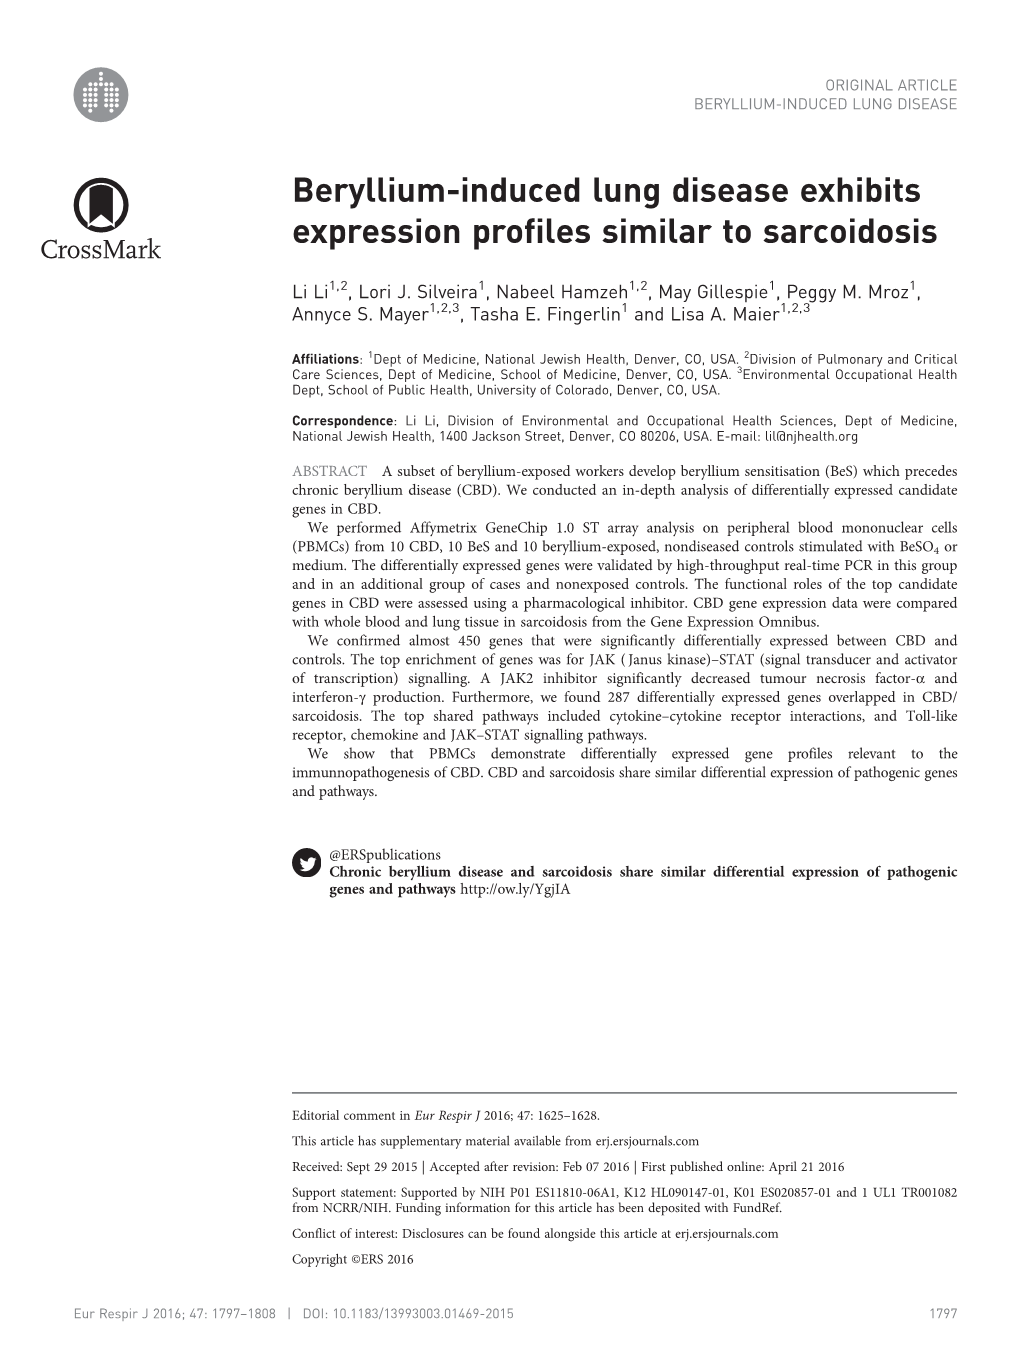 Beryllium-Induced Lung Disease Exhibits Expression Profiles Similar to Sarcoidosis